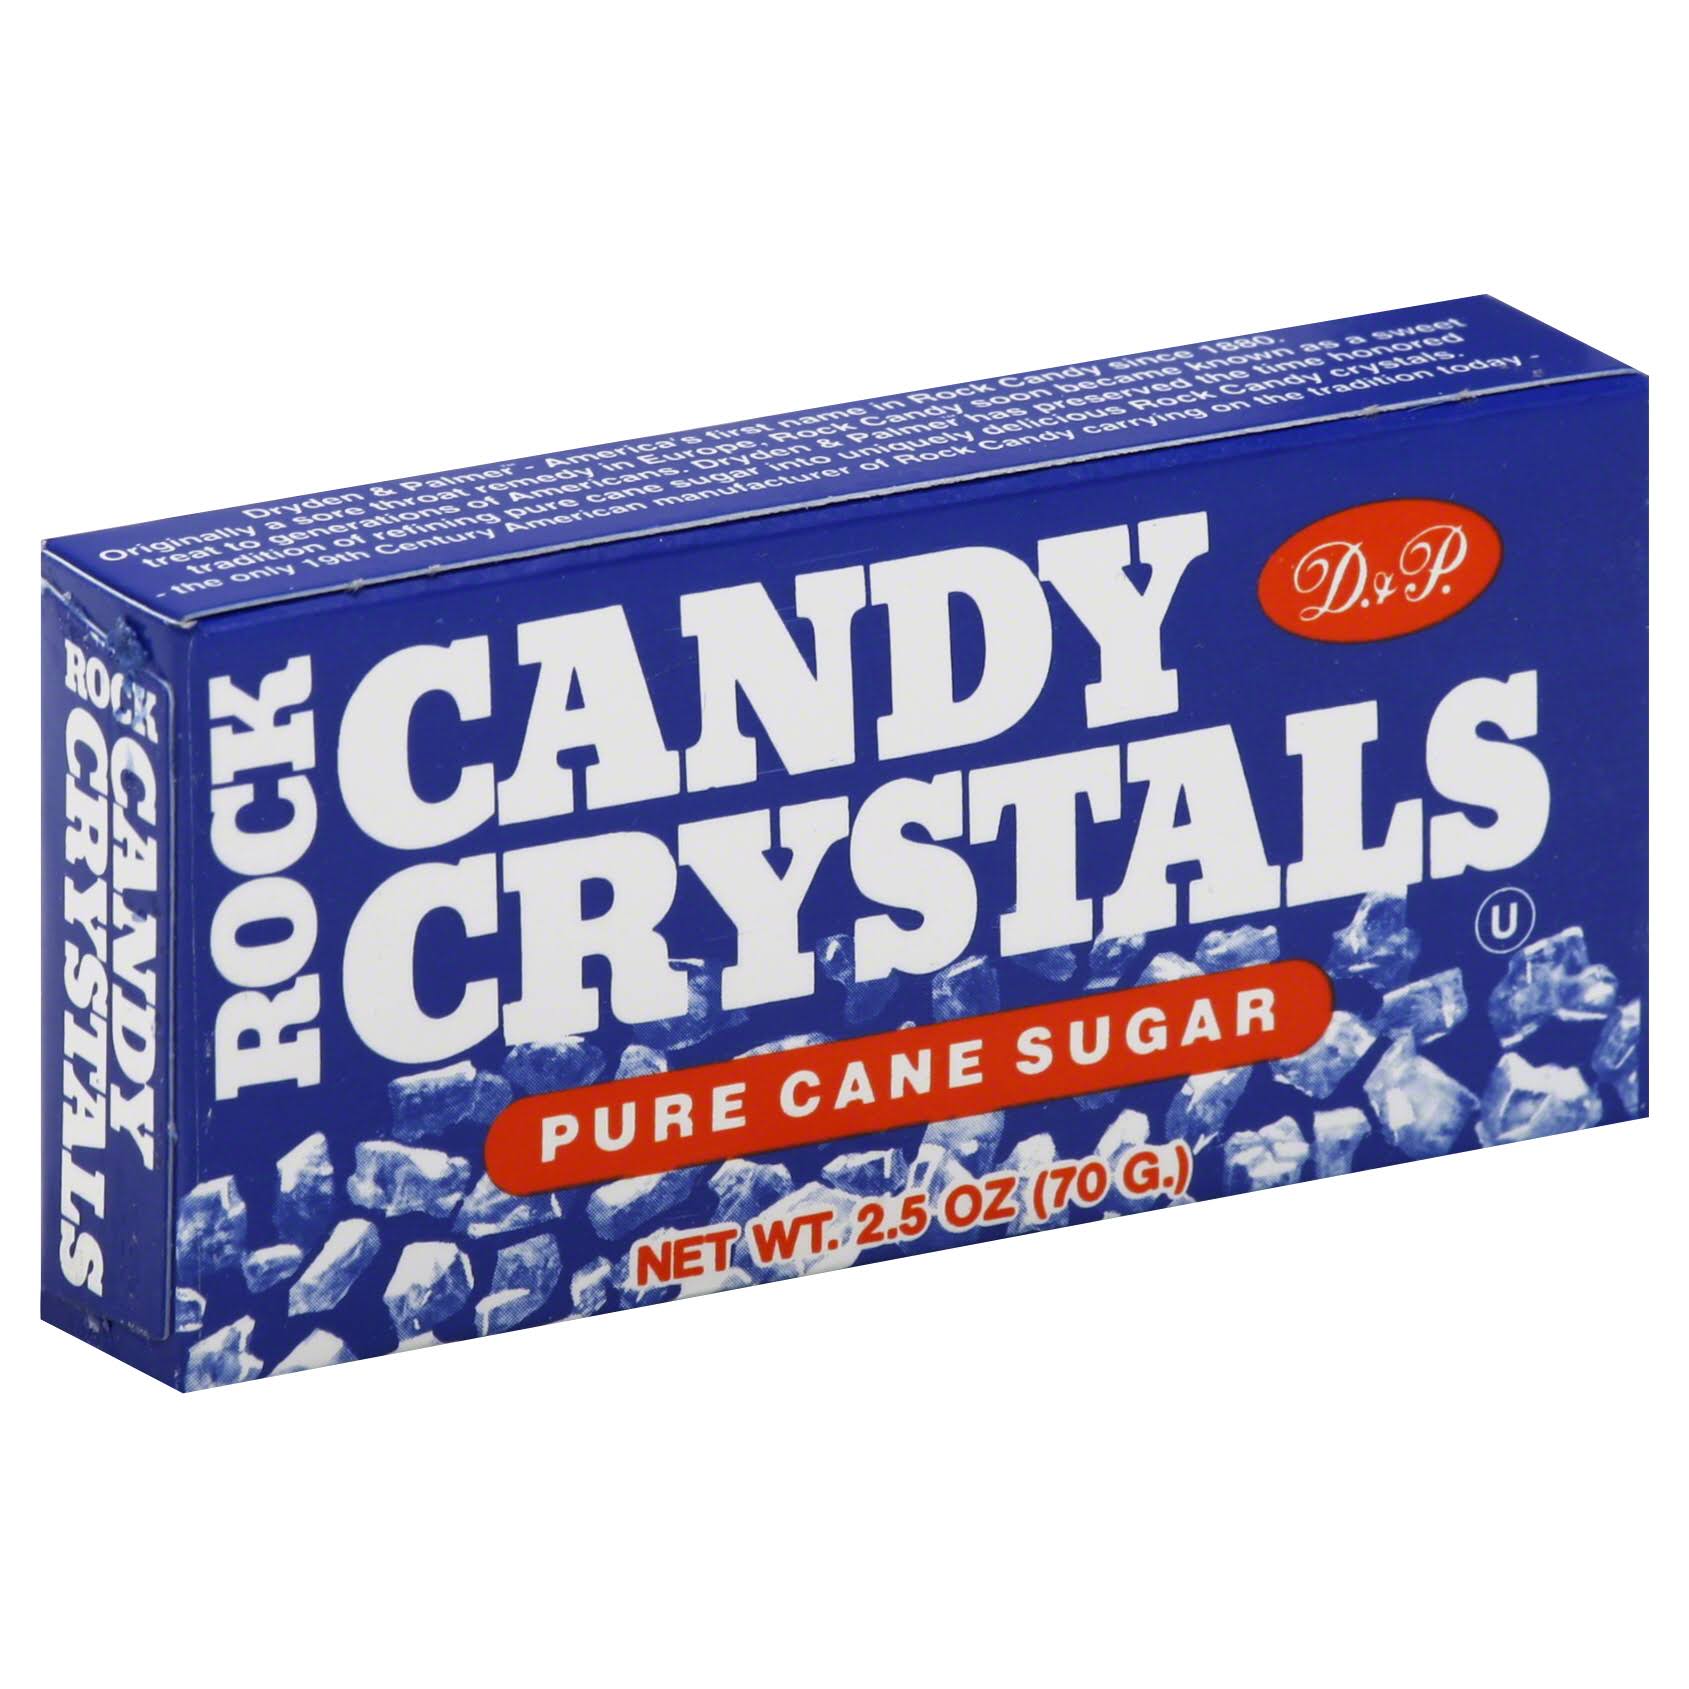 Dryden & Palmer Rock Candy Crystals